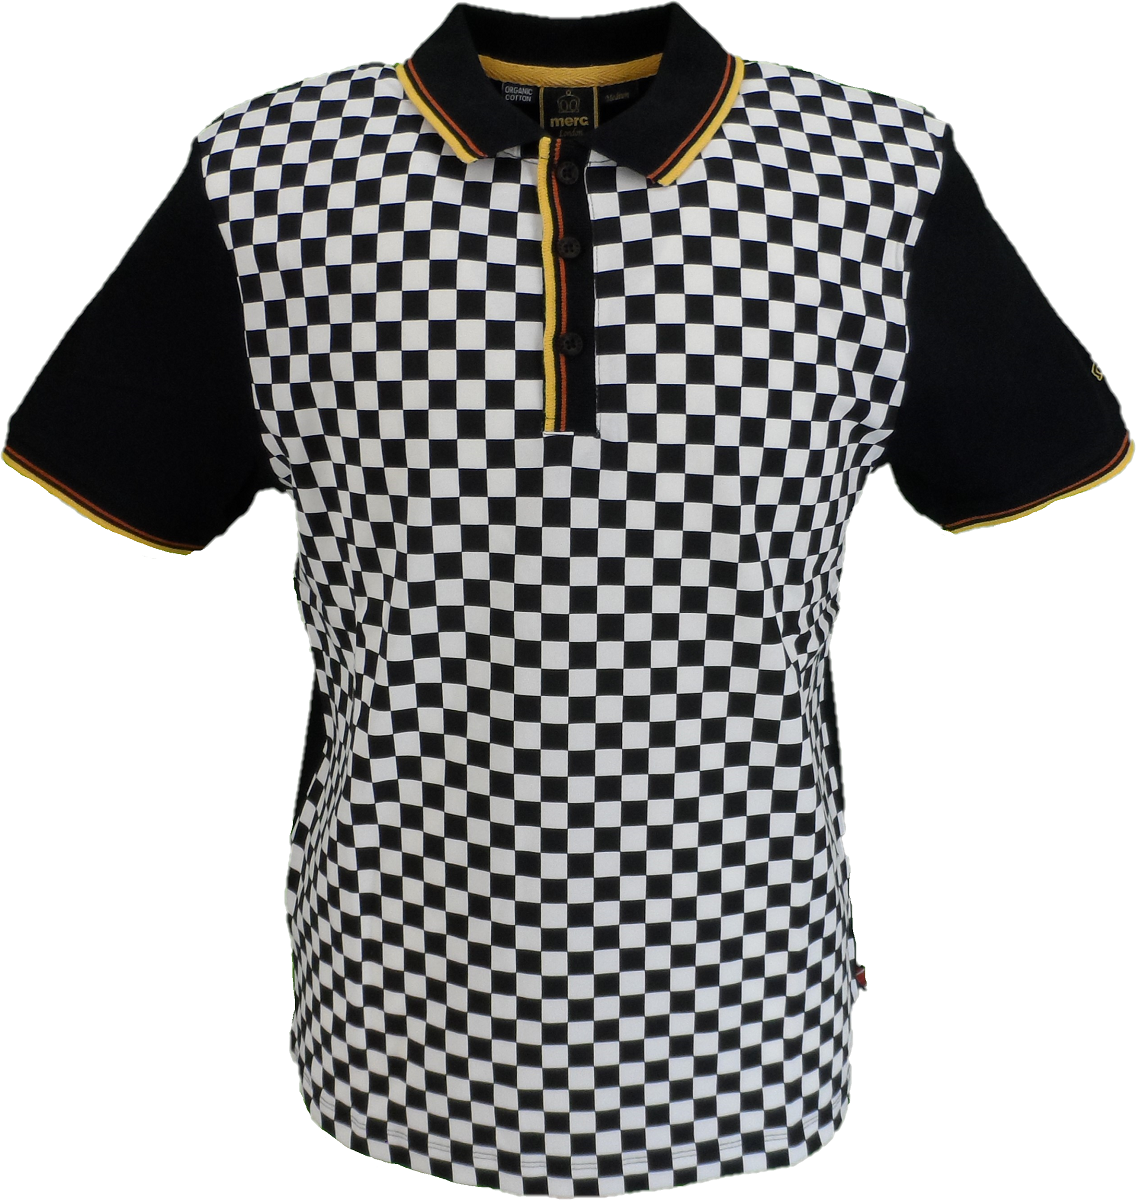 Merc Mens Black/White Checkerboard Retro Polo Shirt